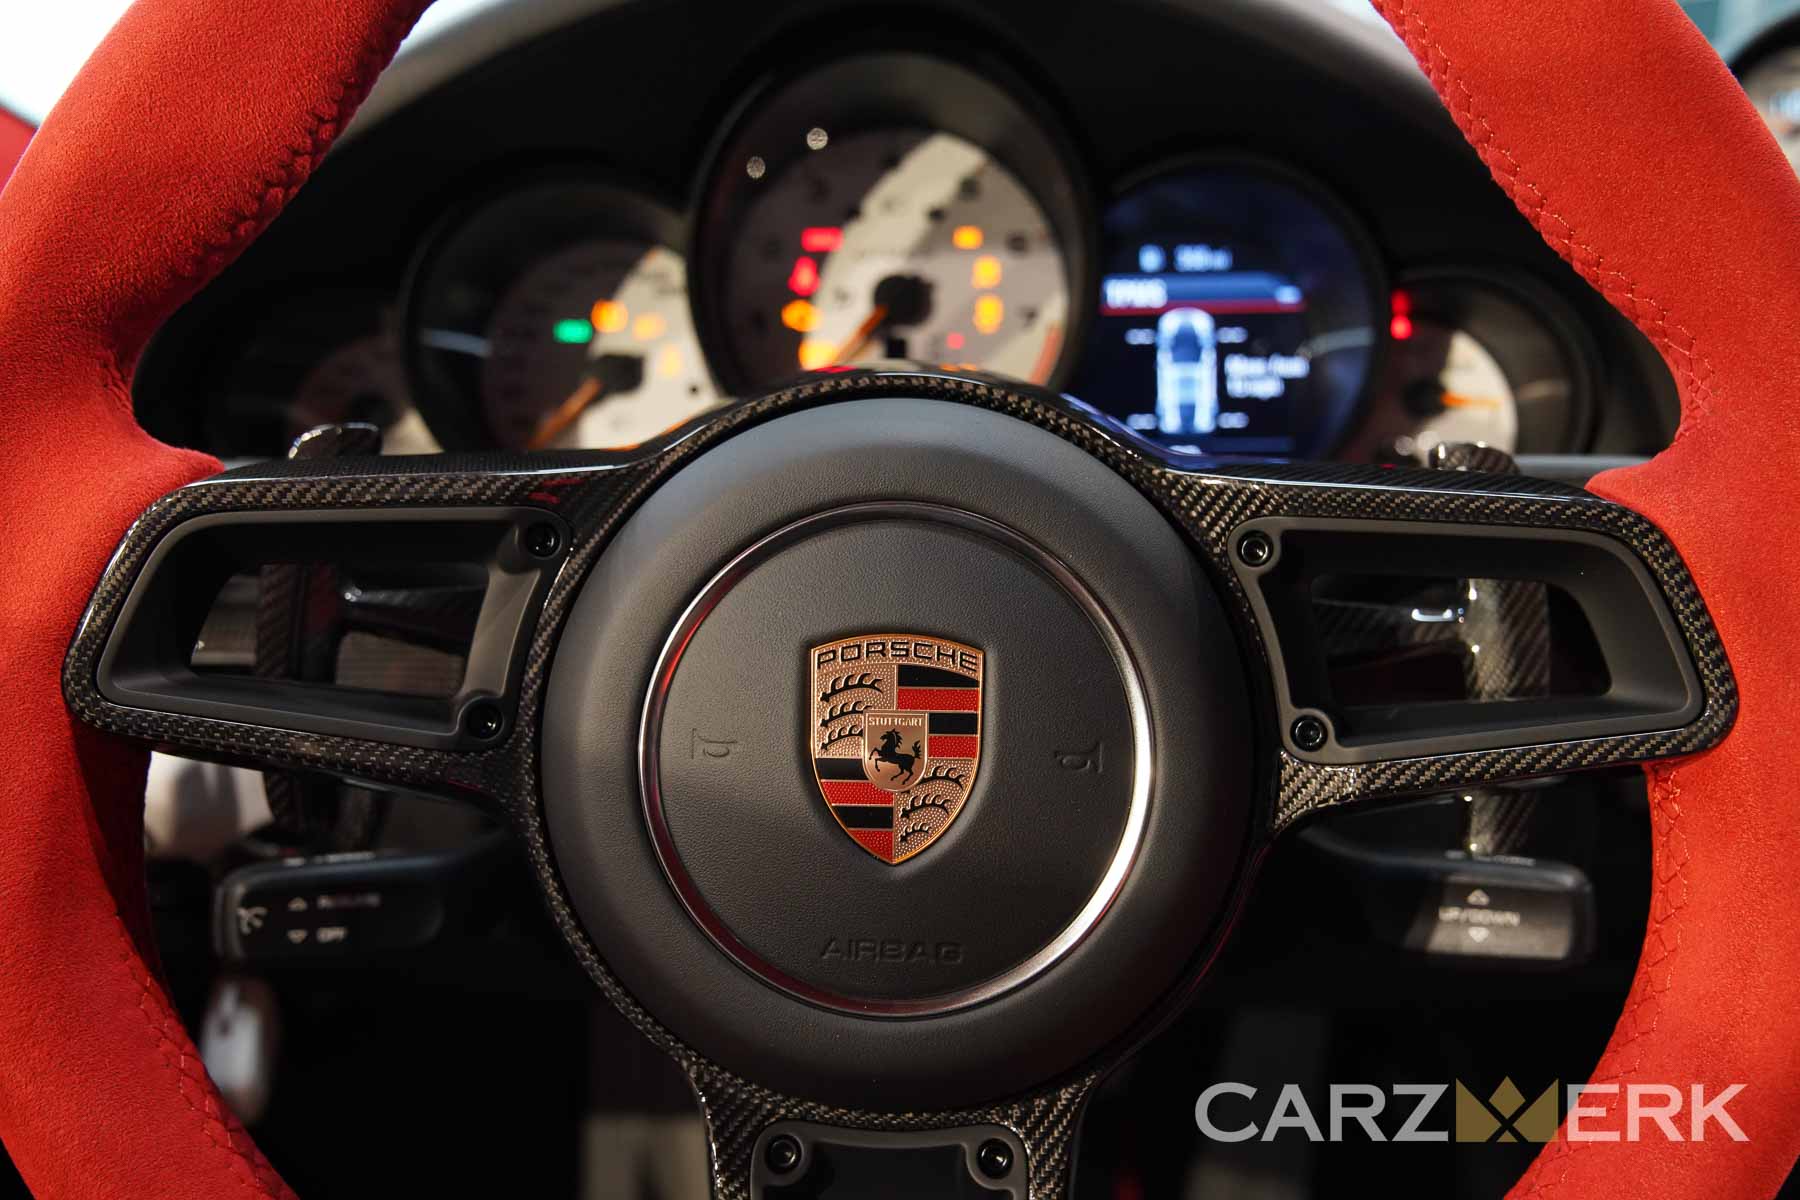 2018 Porsche GT2RS - White C9A - Interior - Red Alcantara Steering wheel - Carbon Fiber Insert